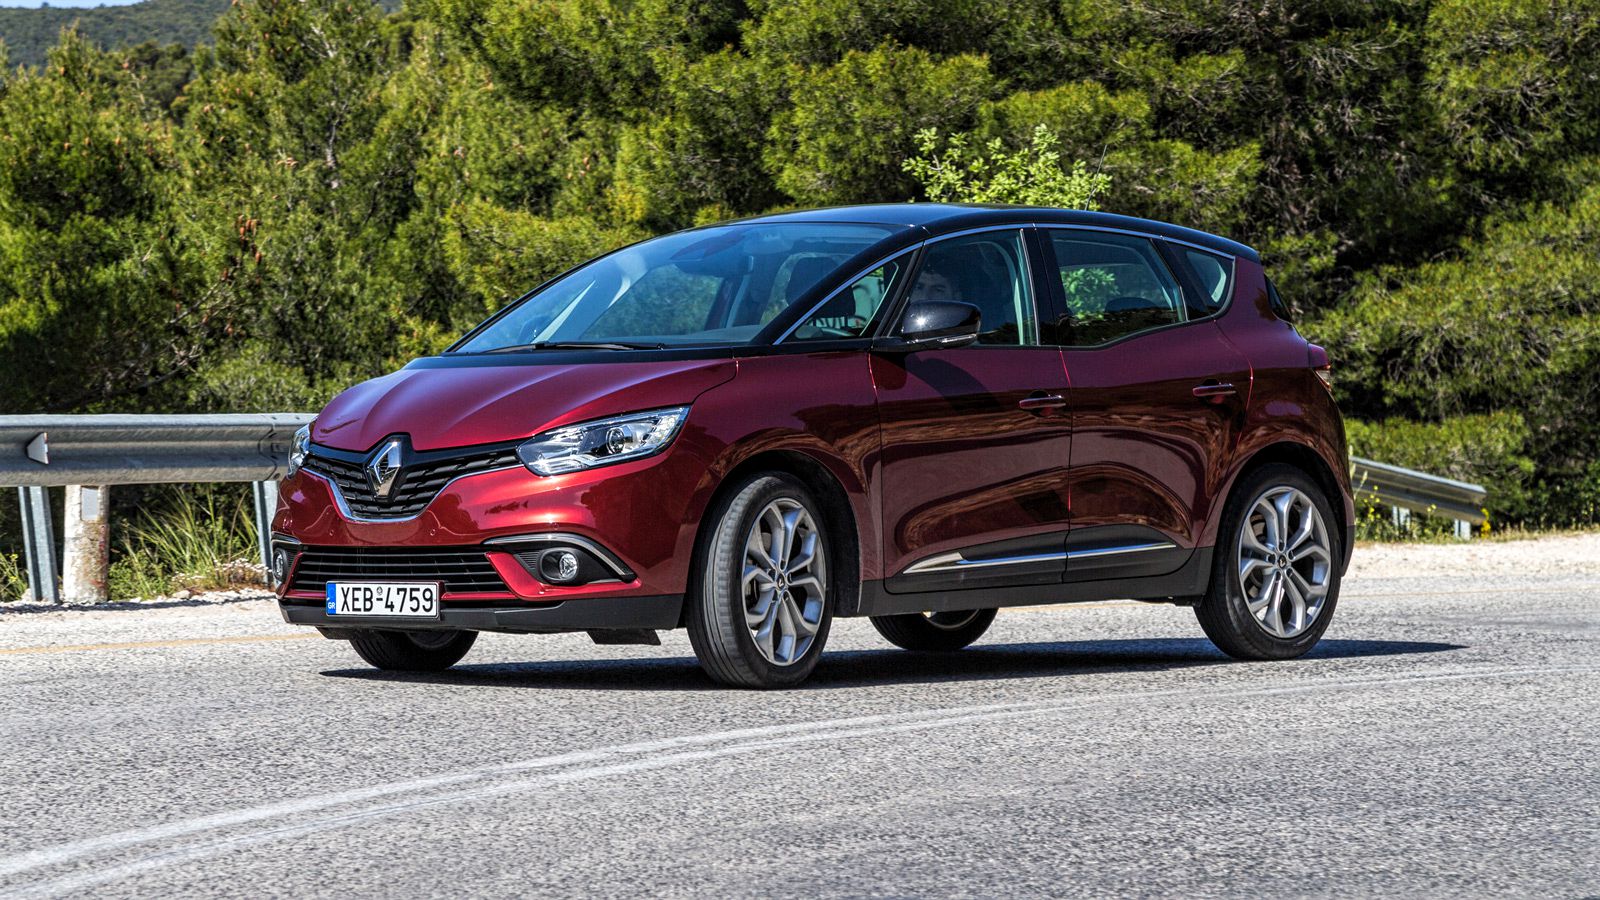 Renault Scenic: Πρακτικό σε χώρους, δυναμικό σε εμφάνιση